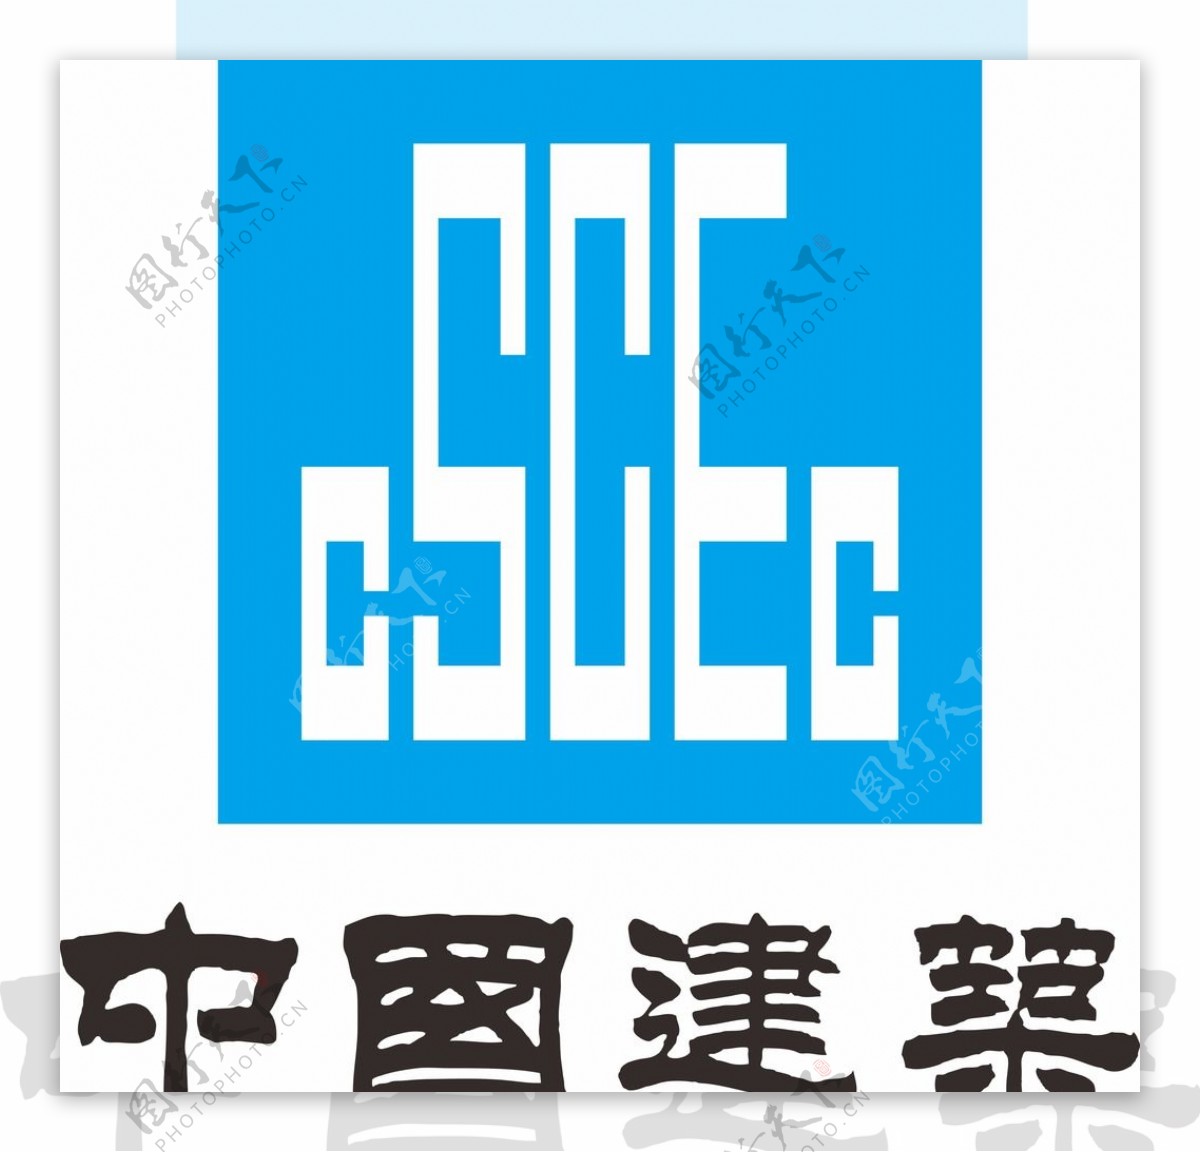 中建六局logo